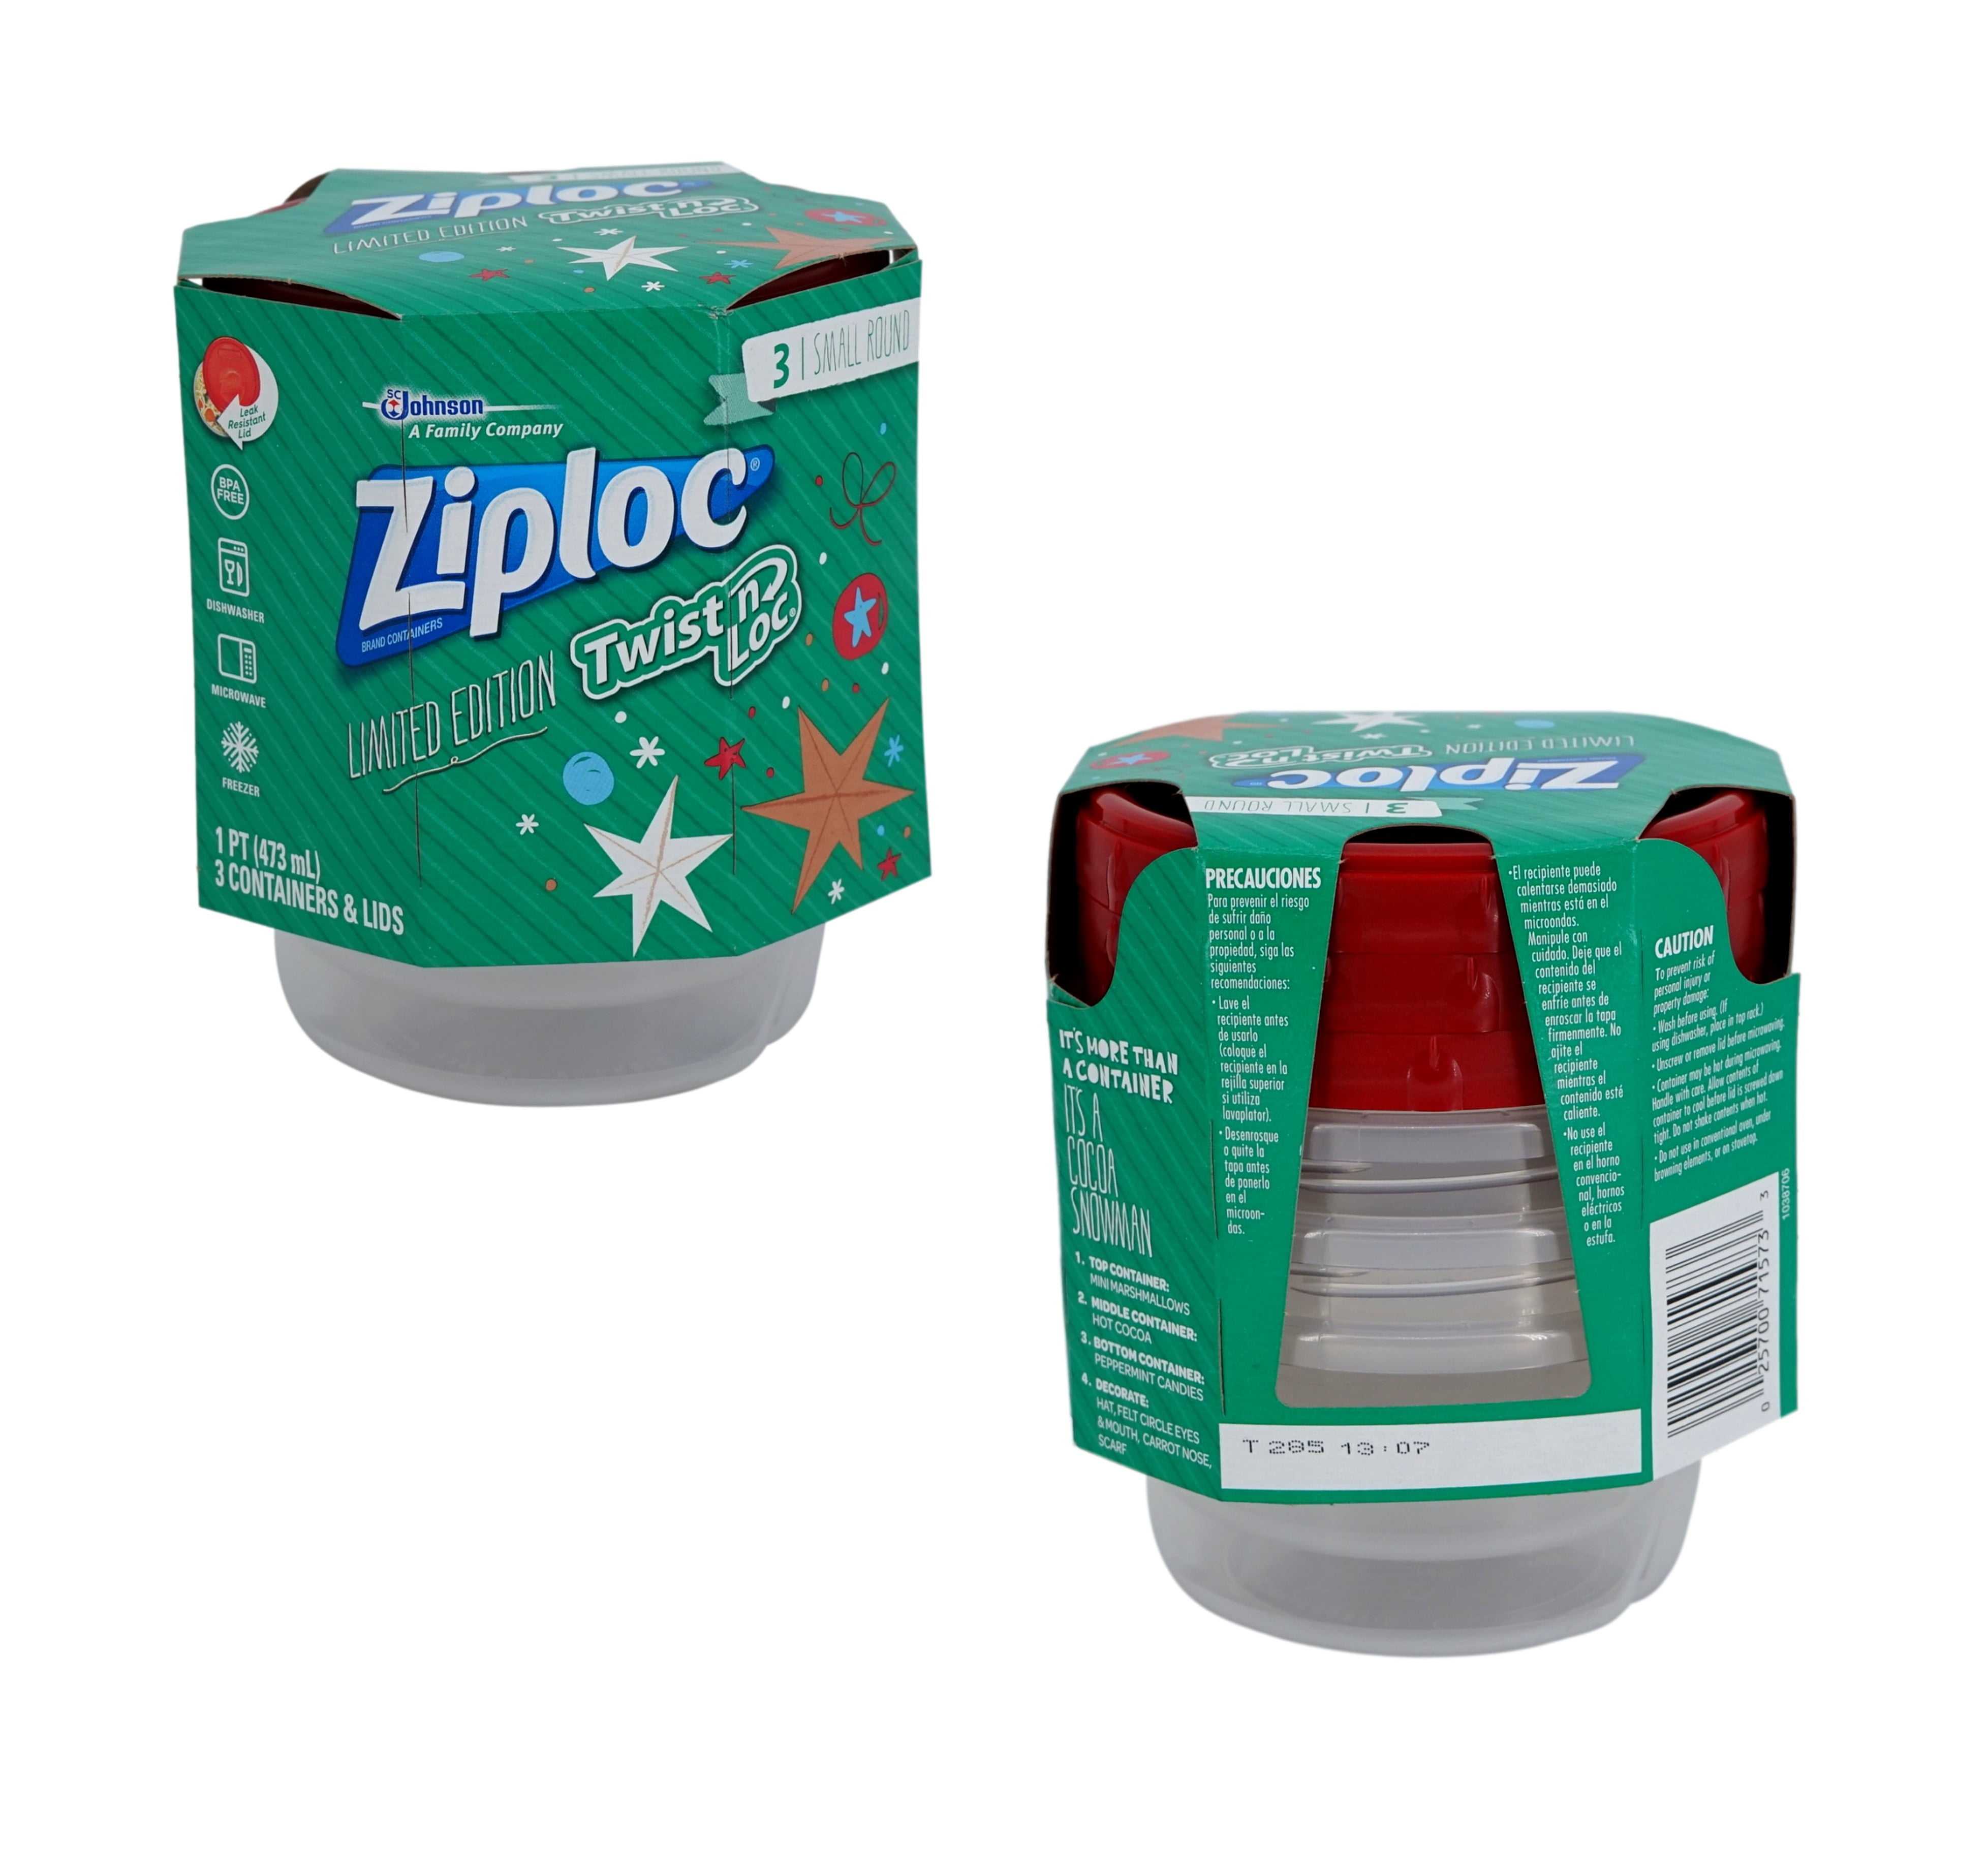 Ziploc 16 oz Twist 'N Loc 3 Containers Small Round BPA Free Dishwasher  Freezer